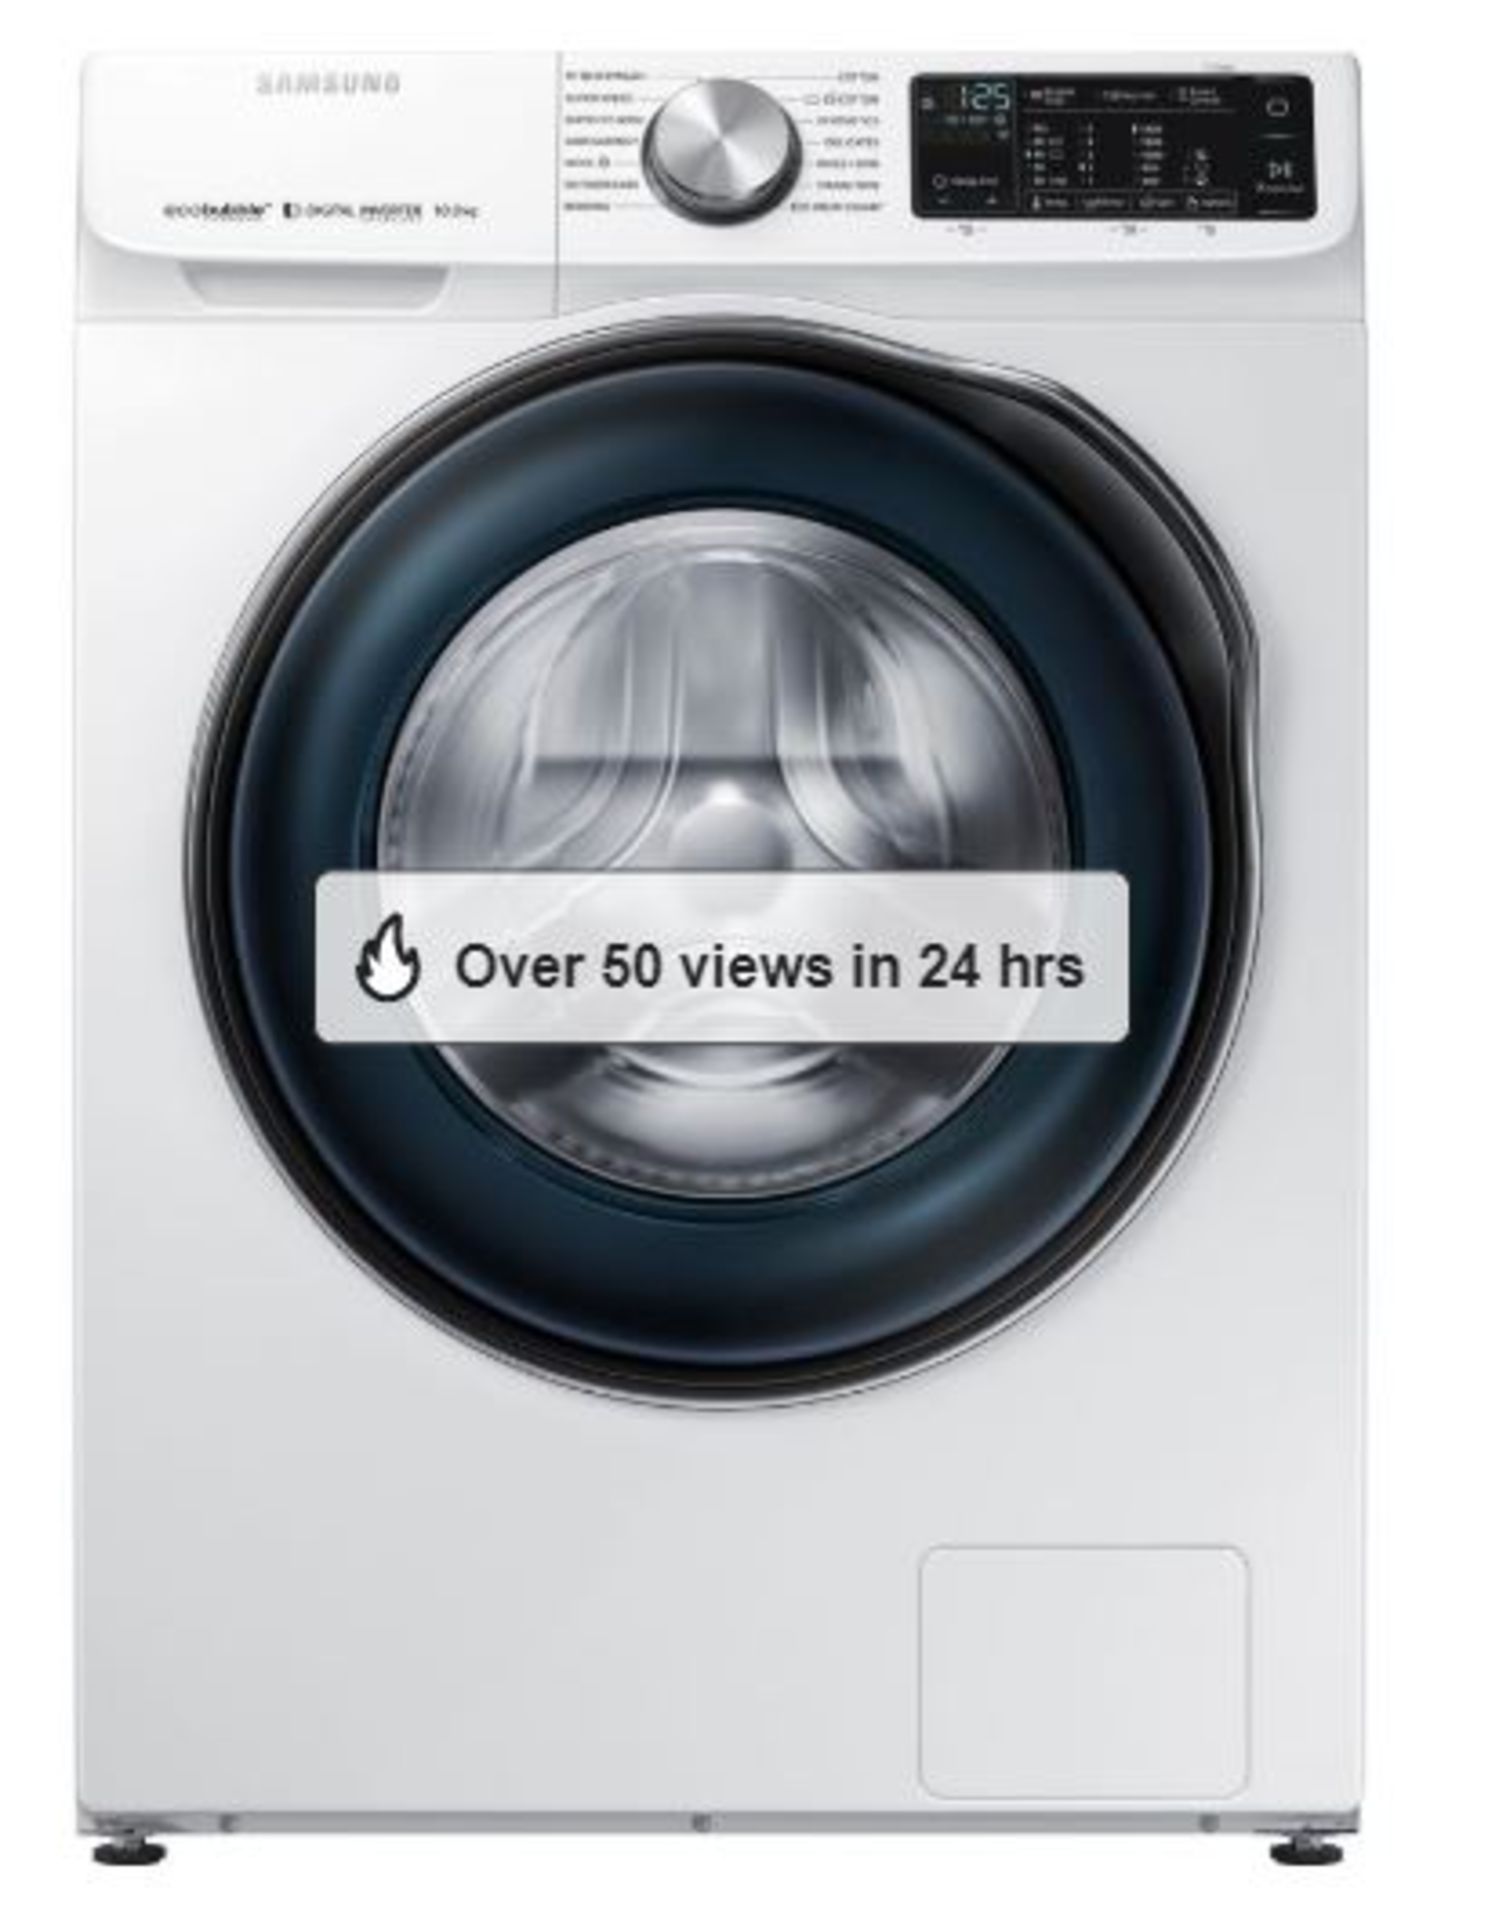 Pallet of 2 Samsung Premium Washing machines. Total Latest selling price £1,219.97*